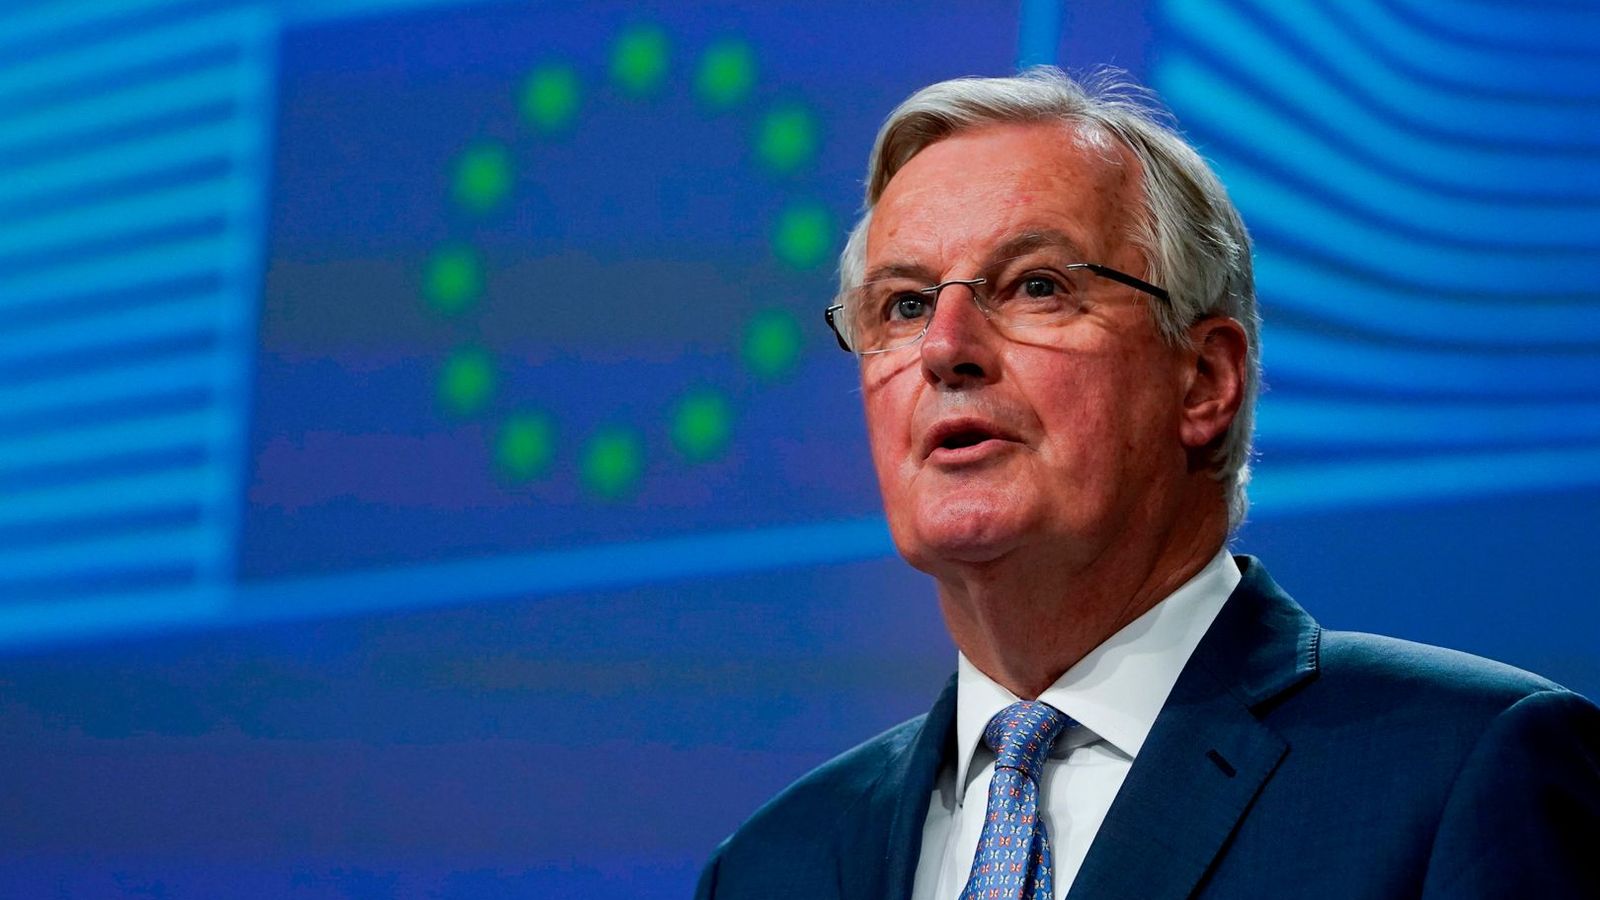 Coronavirus: EU's Brexit negotiator Michel Barnier tests positive for COVID-19